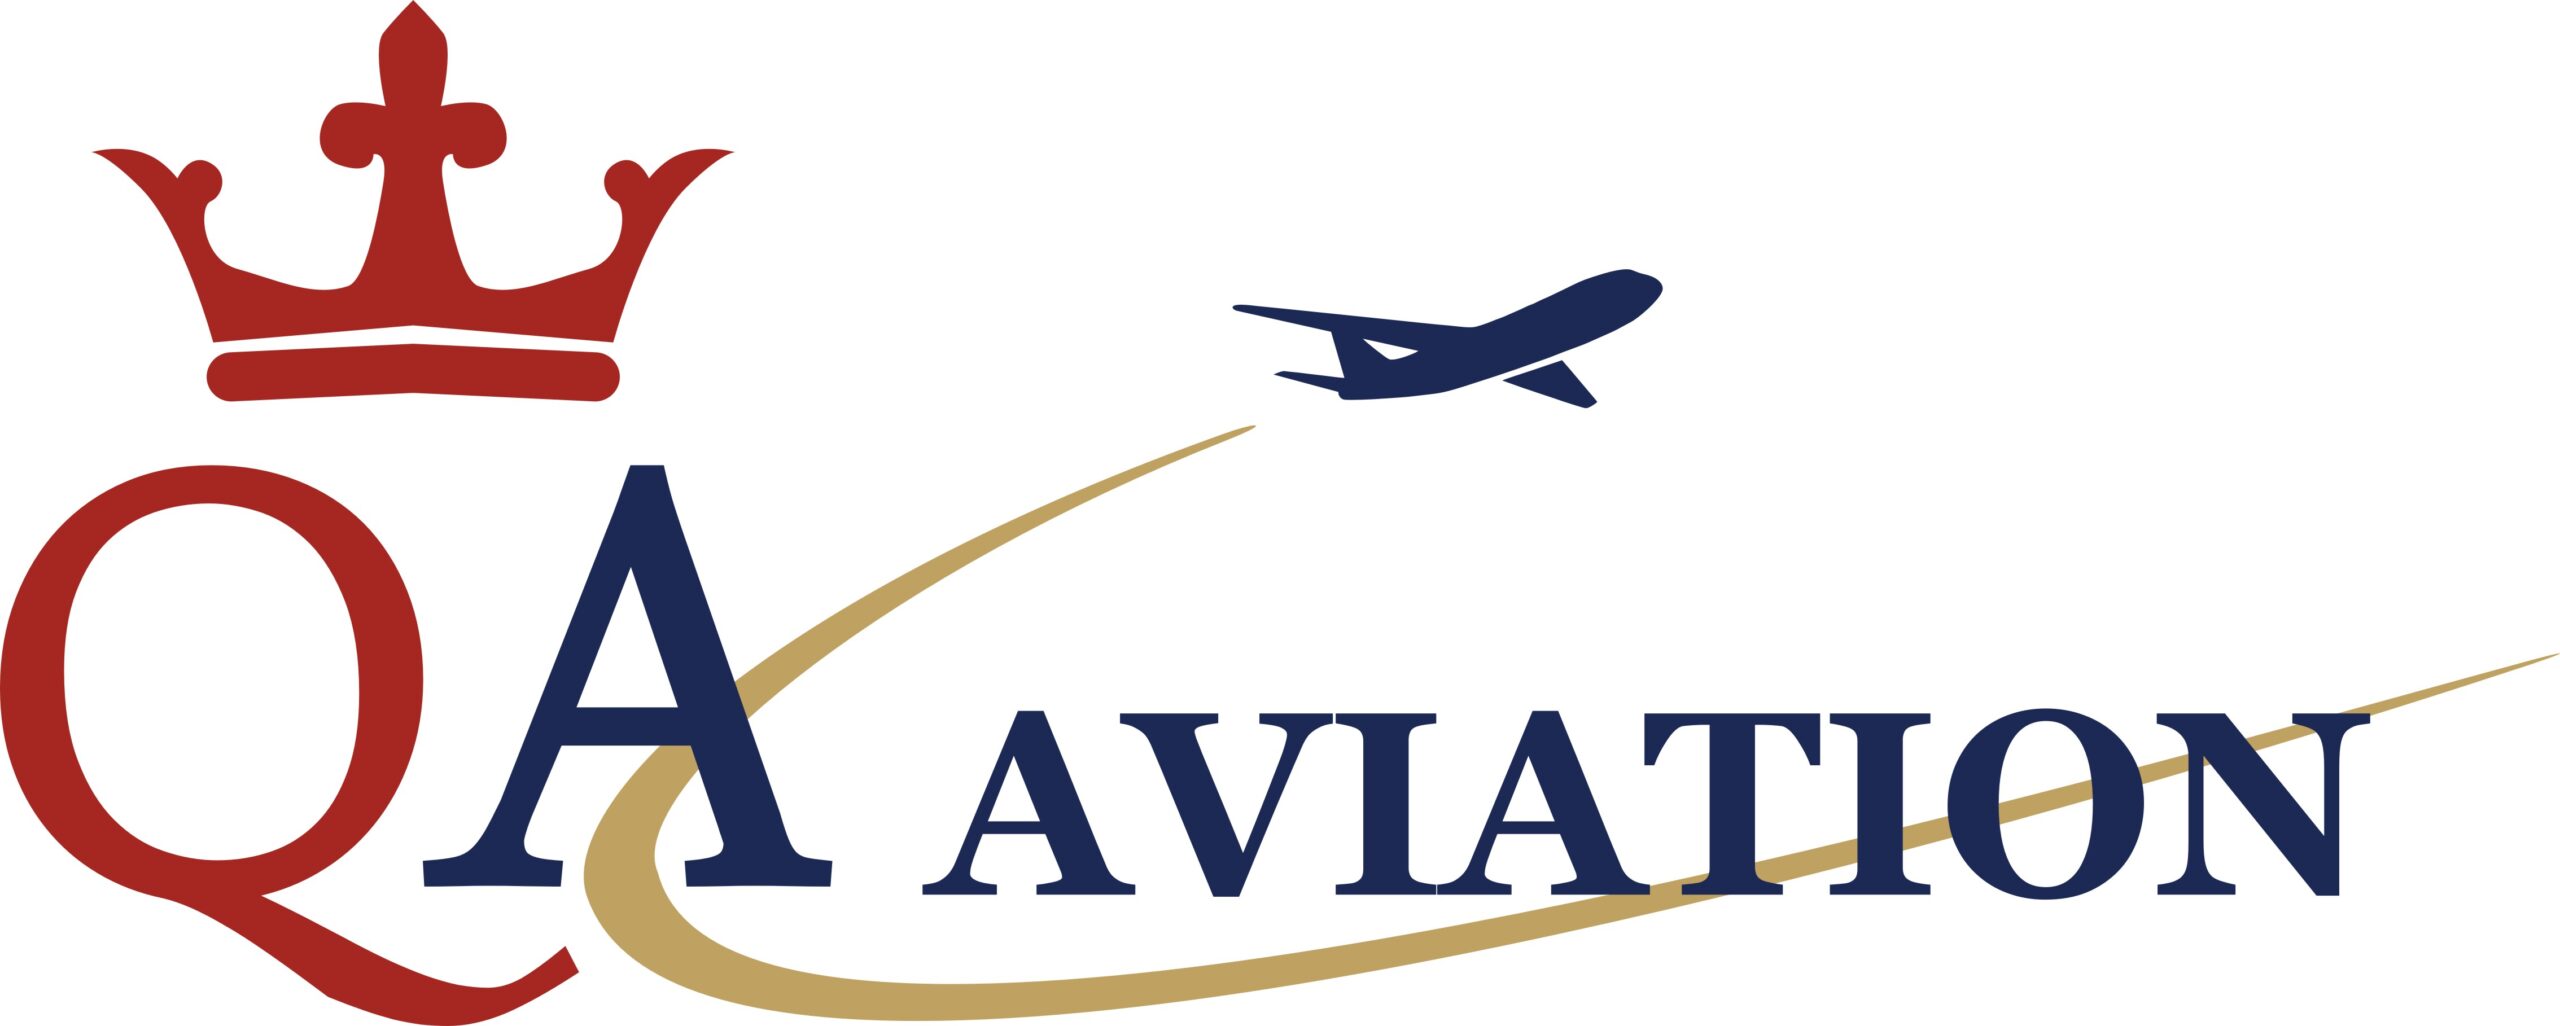 Qaaviation - Letecká přeprava